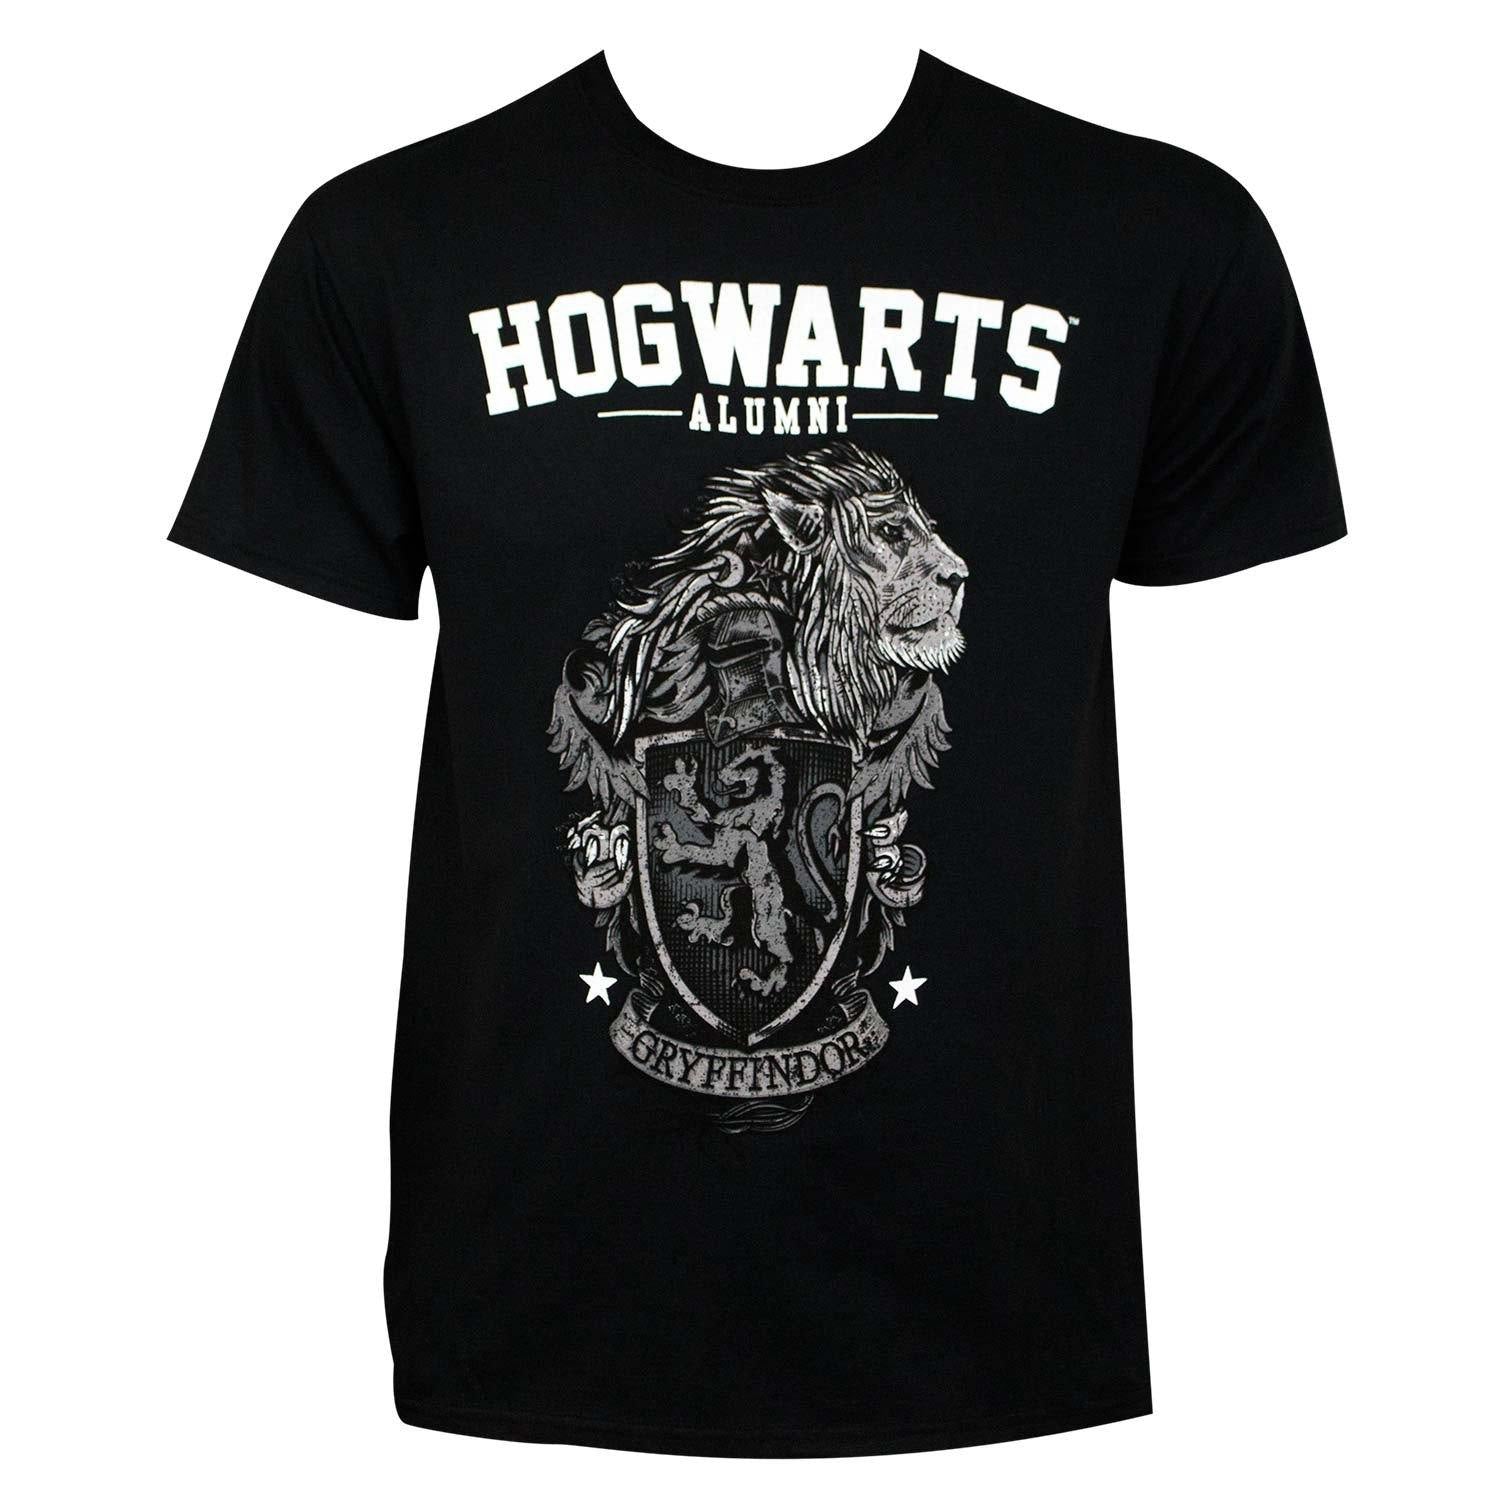 Harry Potter Hogwarts Alumni Adult T-shirt,Black